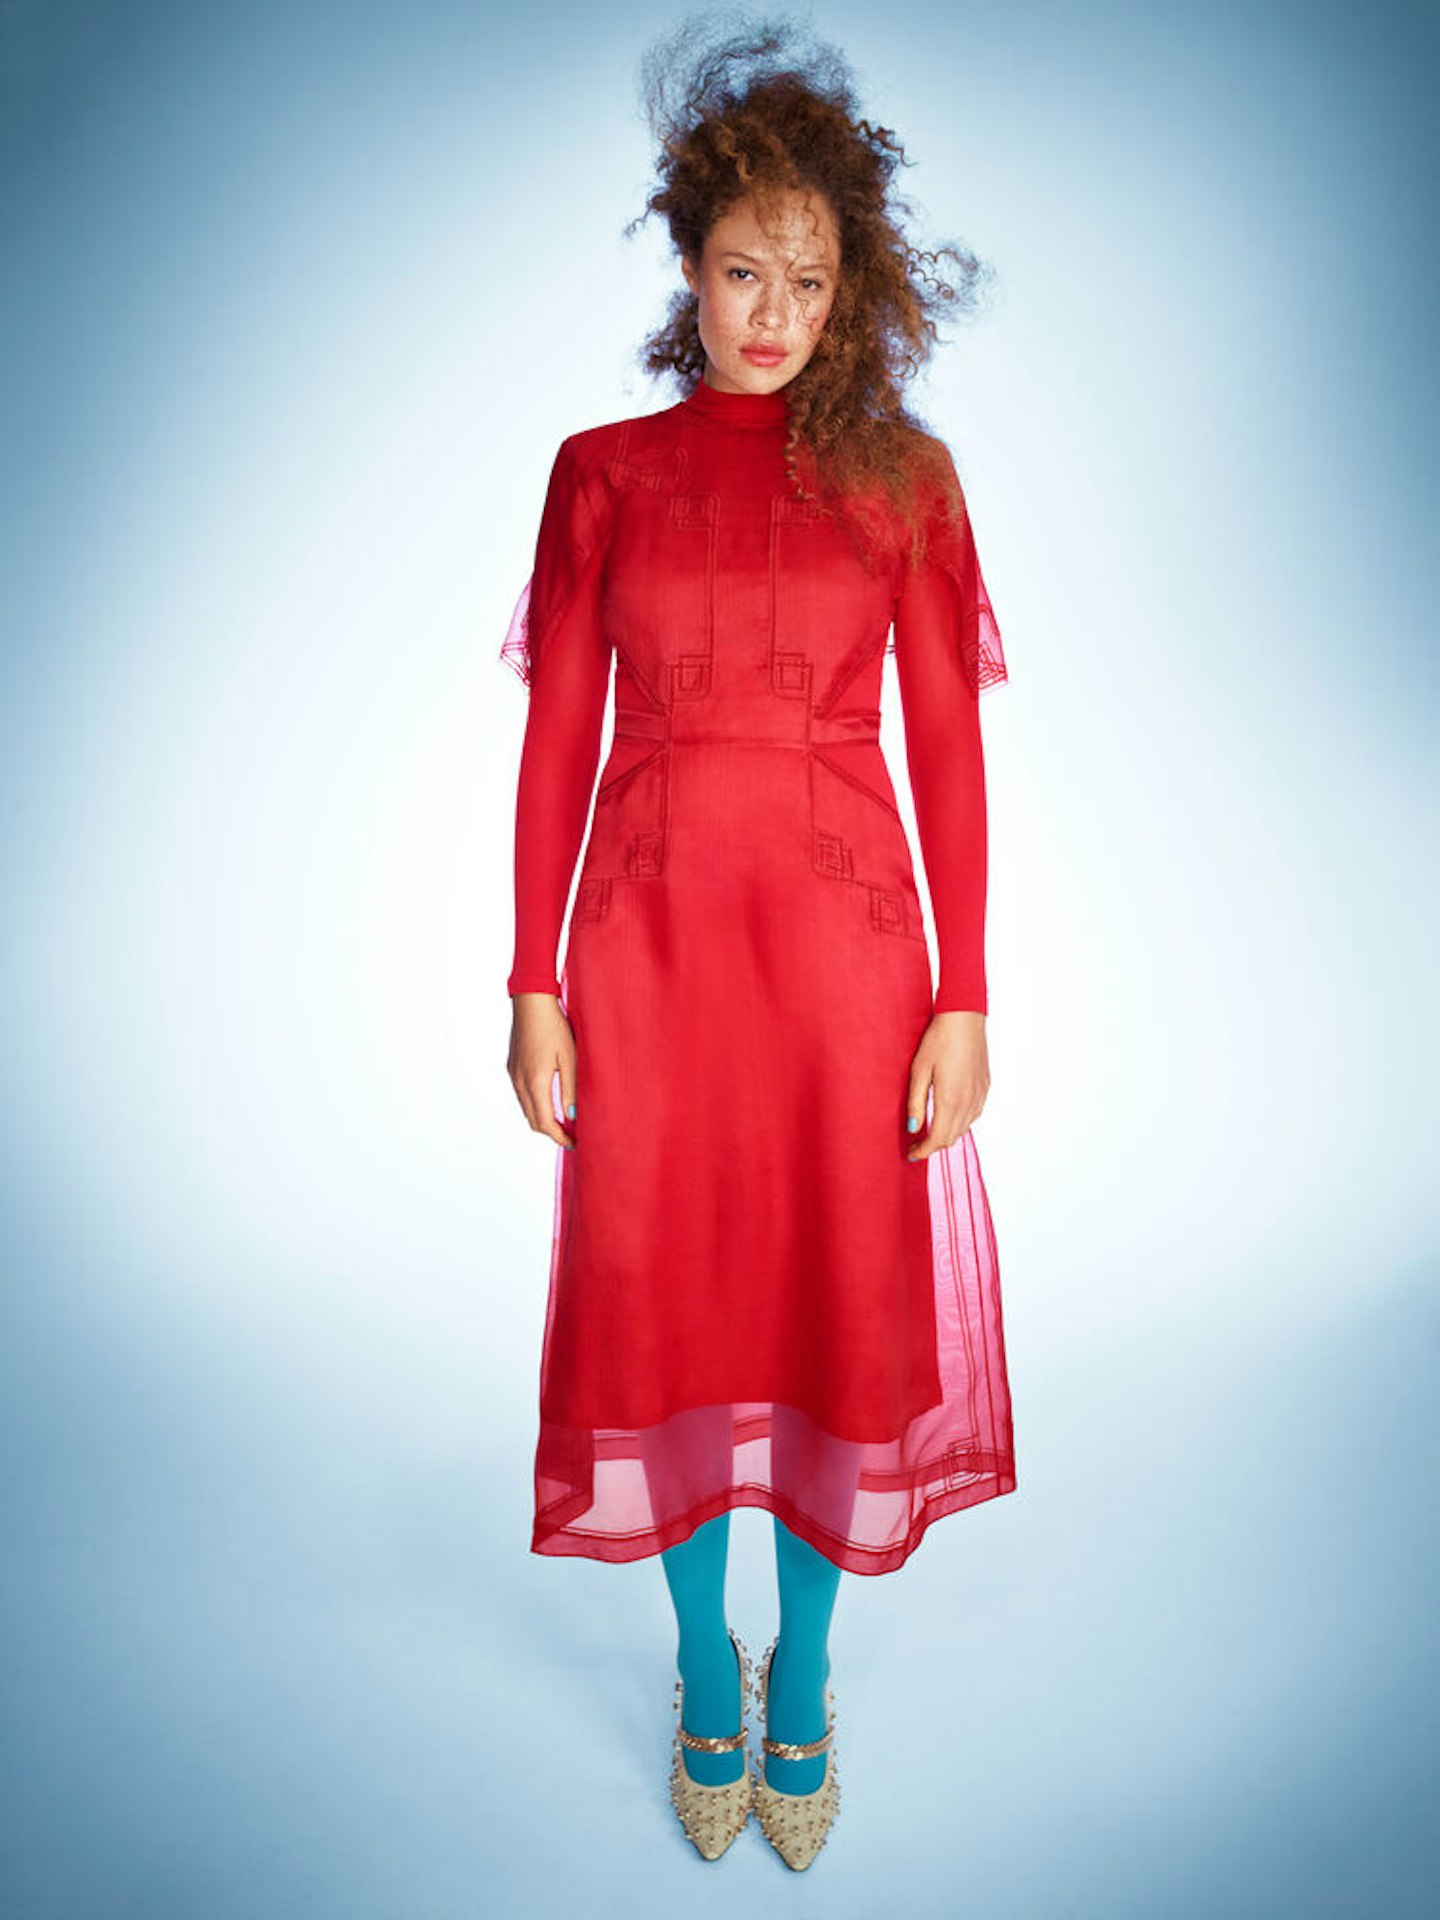 Sabina Karlsson wearing a red dress from Fendi